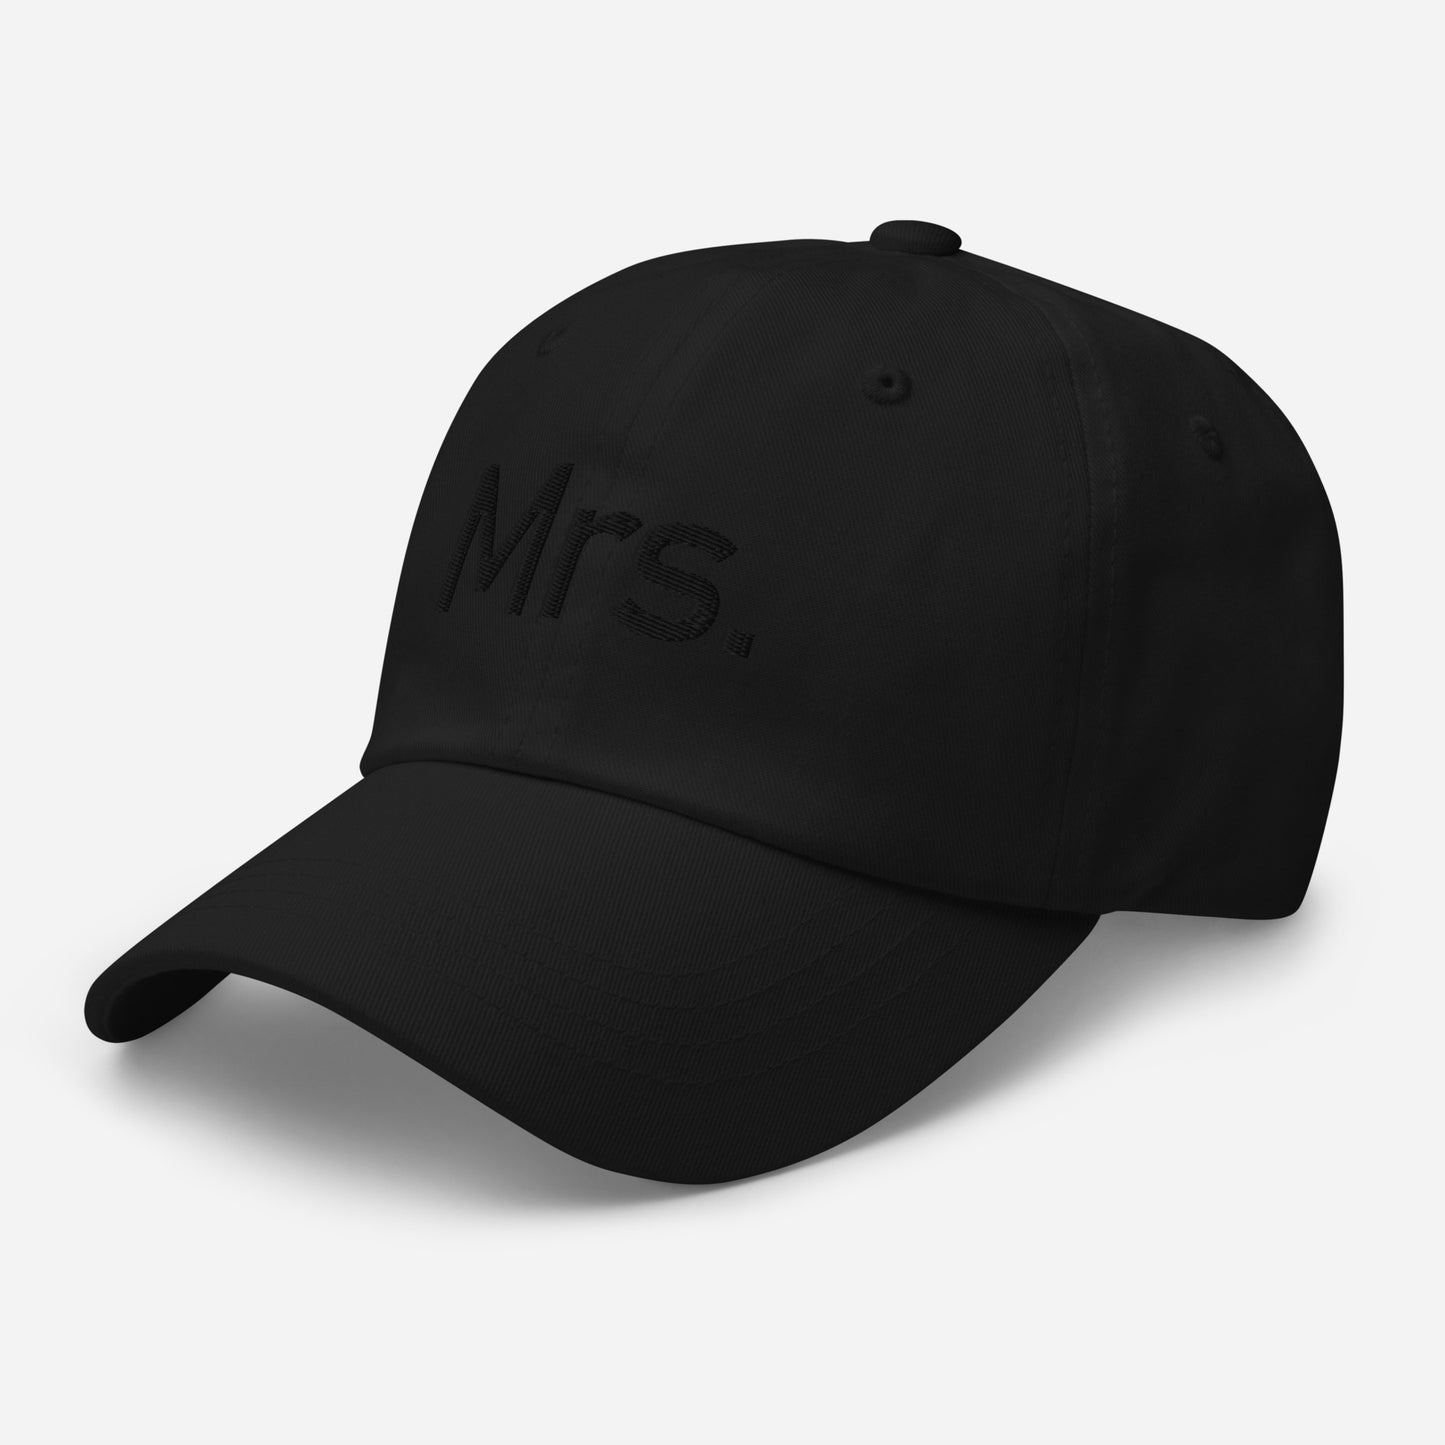 Mrs. - Sustainably Made Baseball Cap